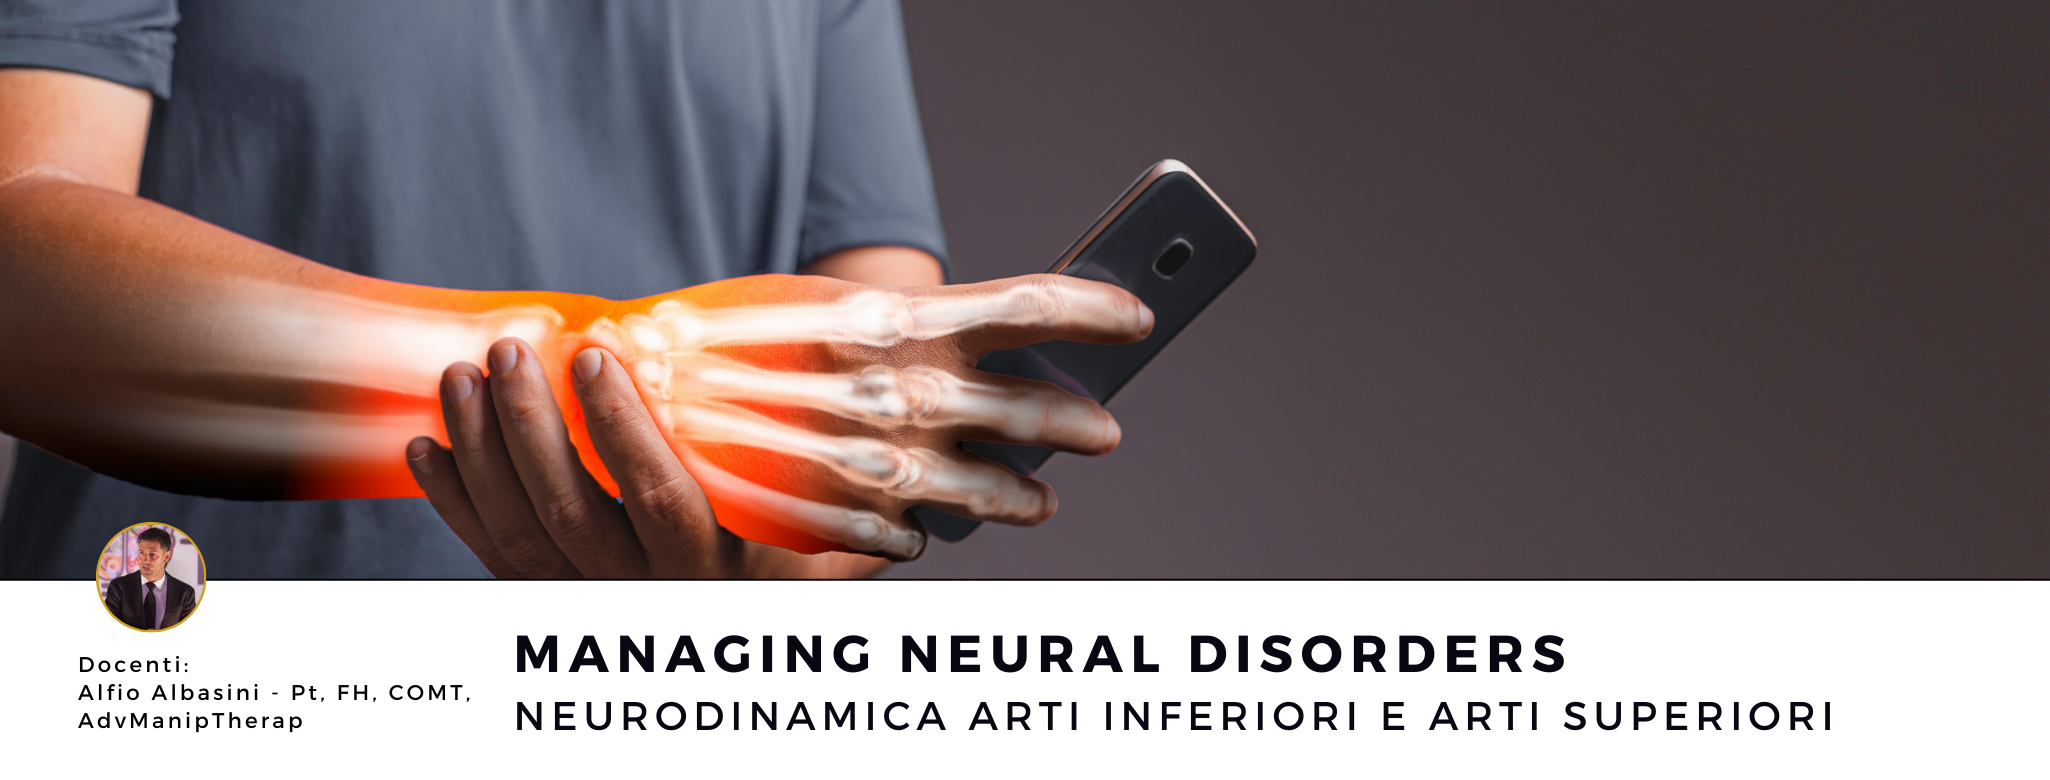 MANAGING NEURAL DISORDERS - NEURODINAMICA